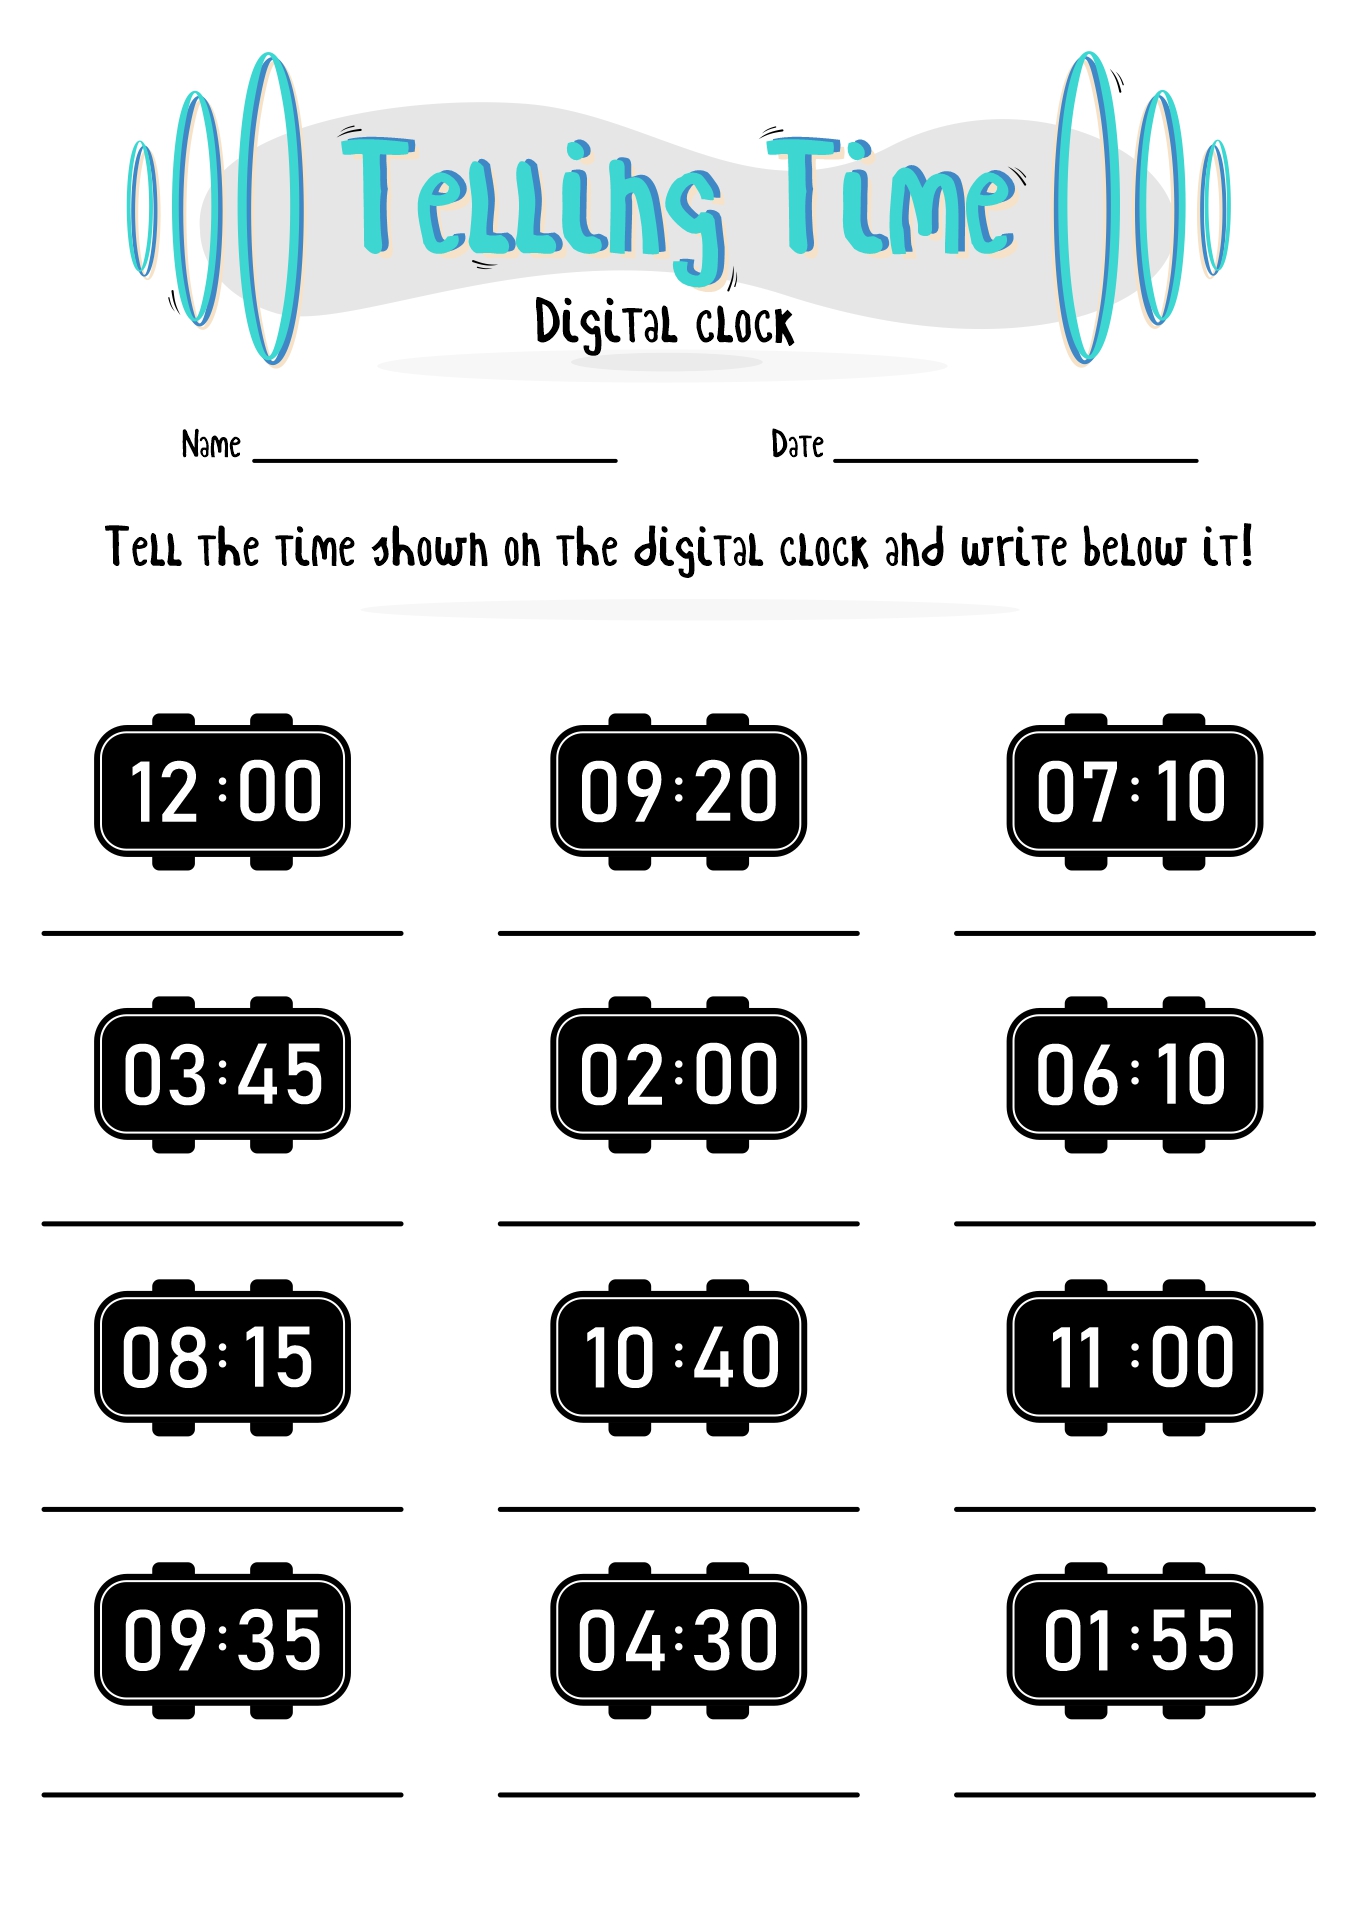 Digital Clock Time Worksheet Image